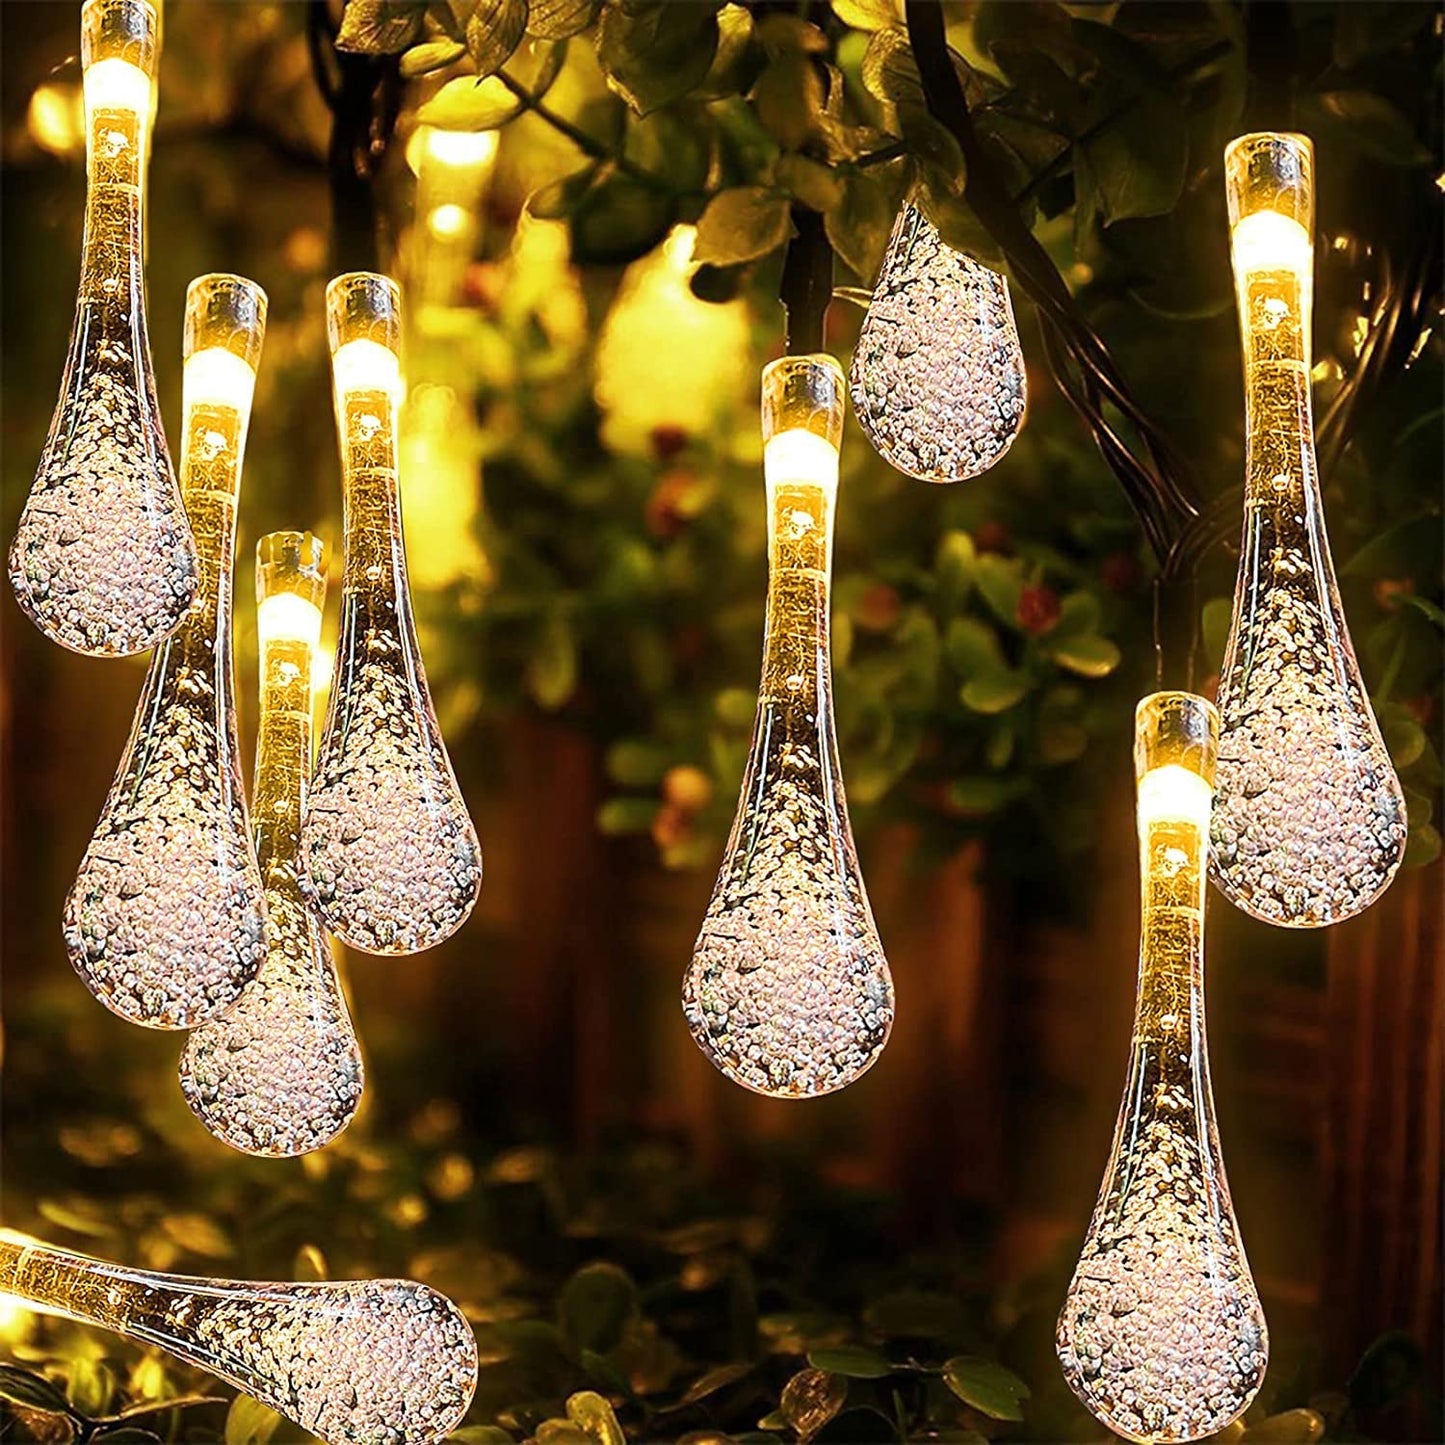 Illuminated glass drops creating a beautiful display.